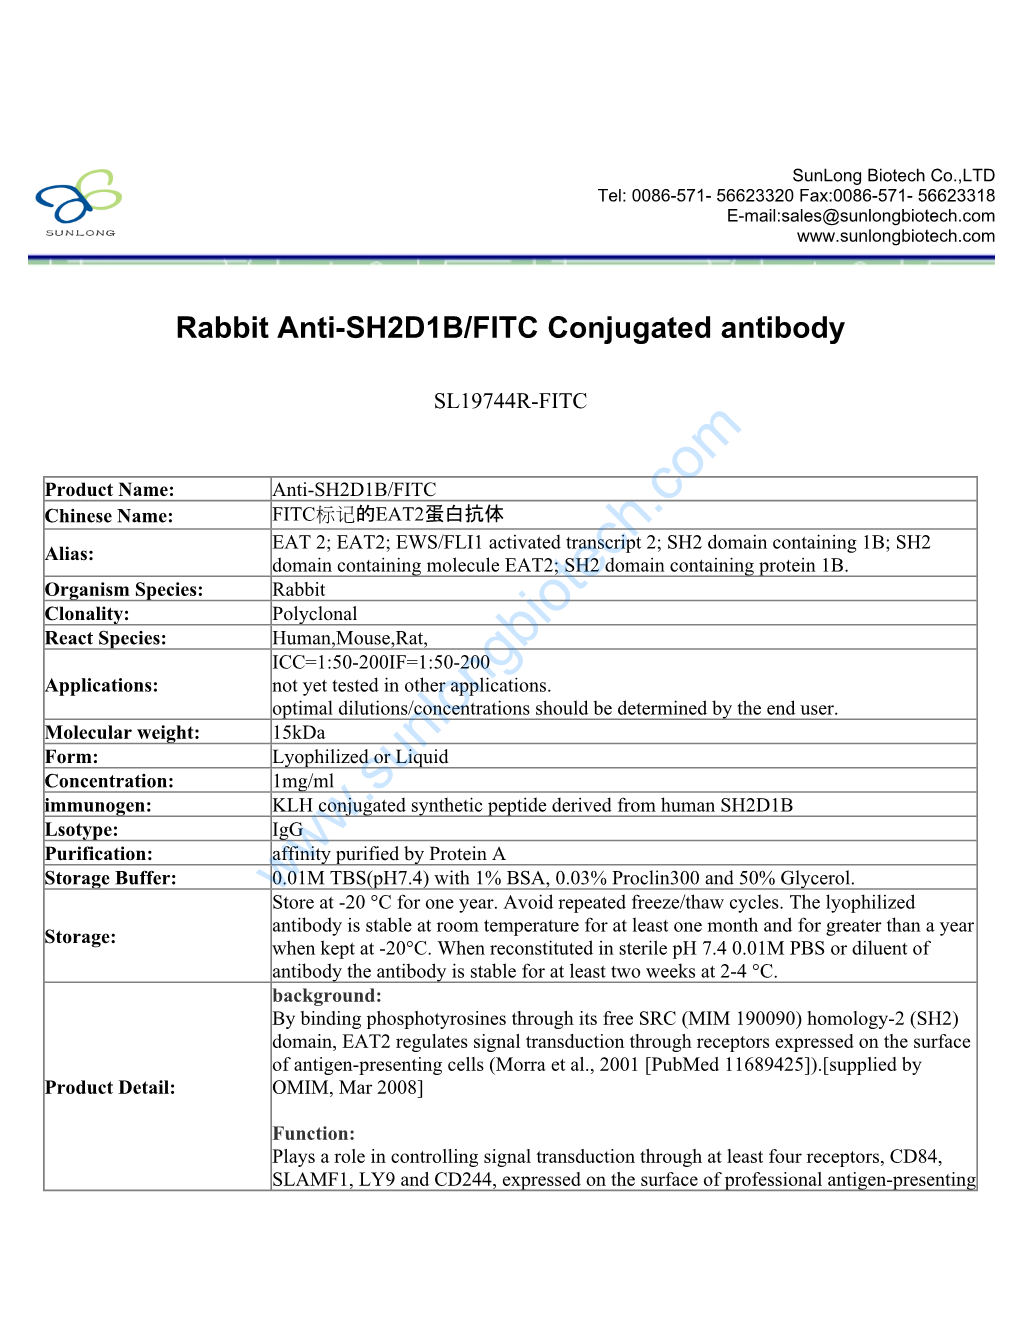 Rabbit Anti-SH2D1B/FITC Conjugated Antibody-SL19744R-FITC